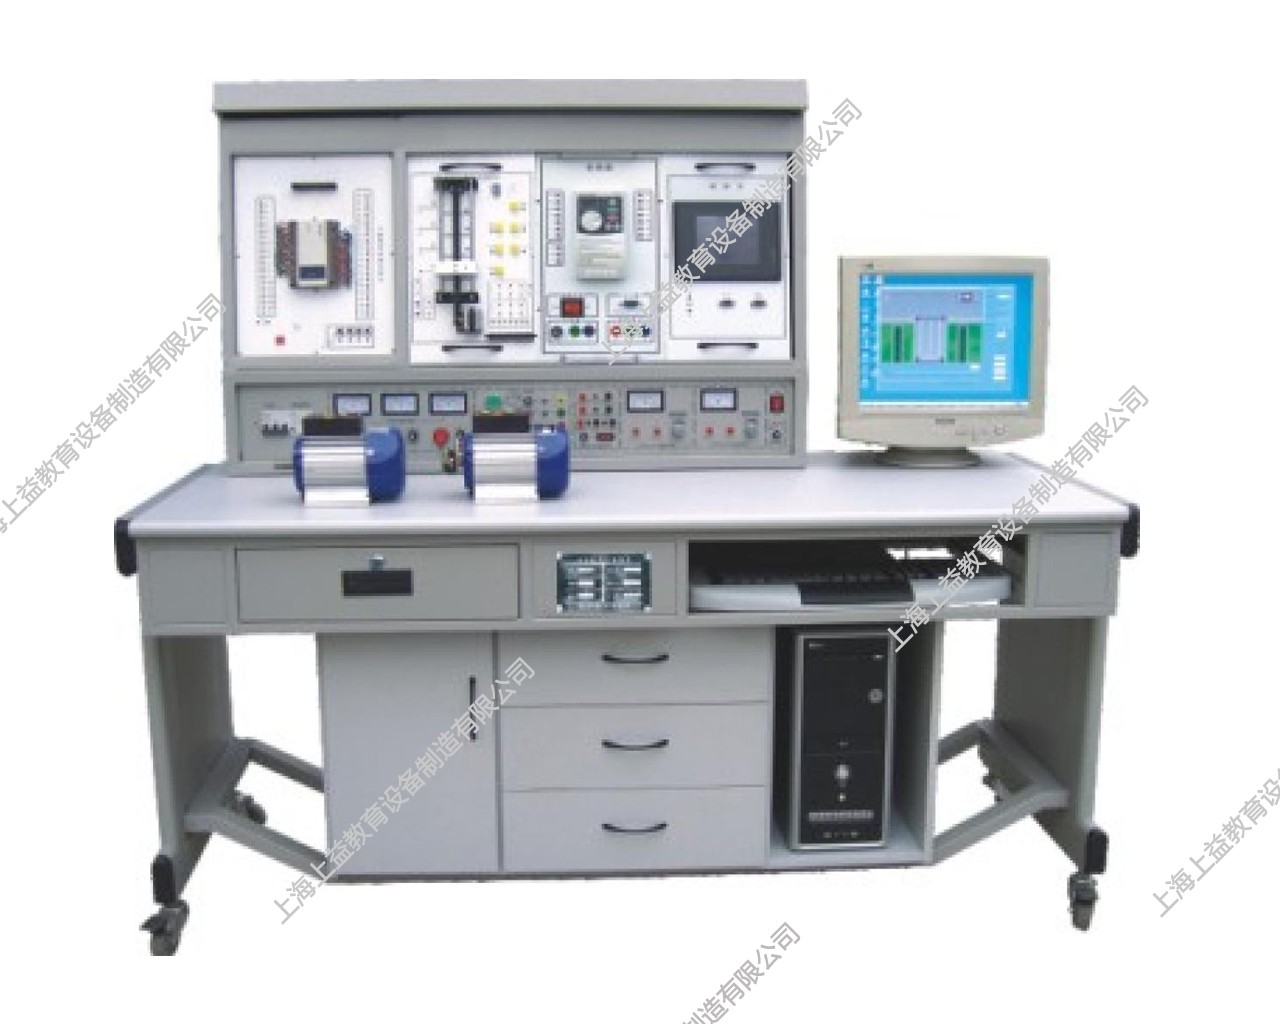 SYPLC-104B網絡型PLC可編程控制器/變頻調速/電氣控制及單片機綜合實驗裝置（PLC、變頻器、觸摸屏、電氣控制、單片機）